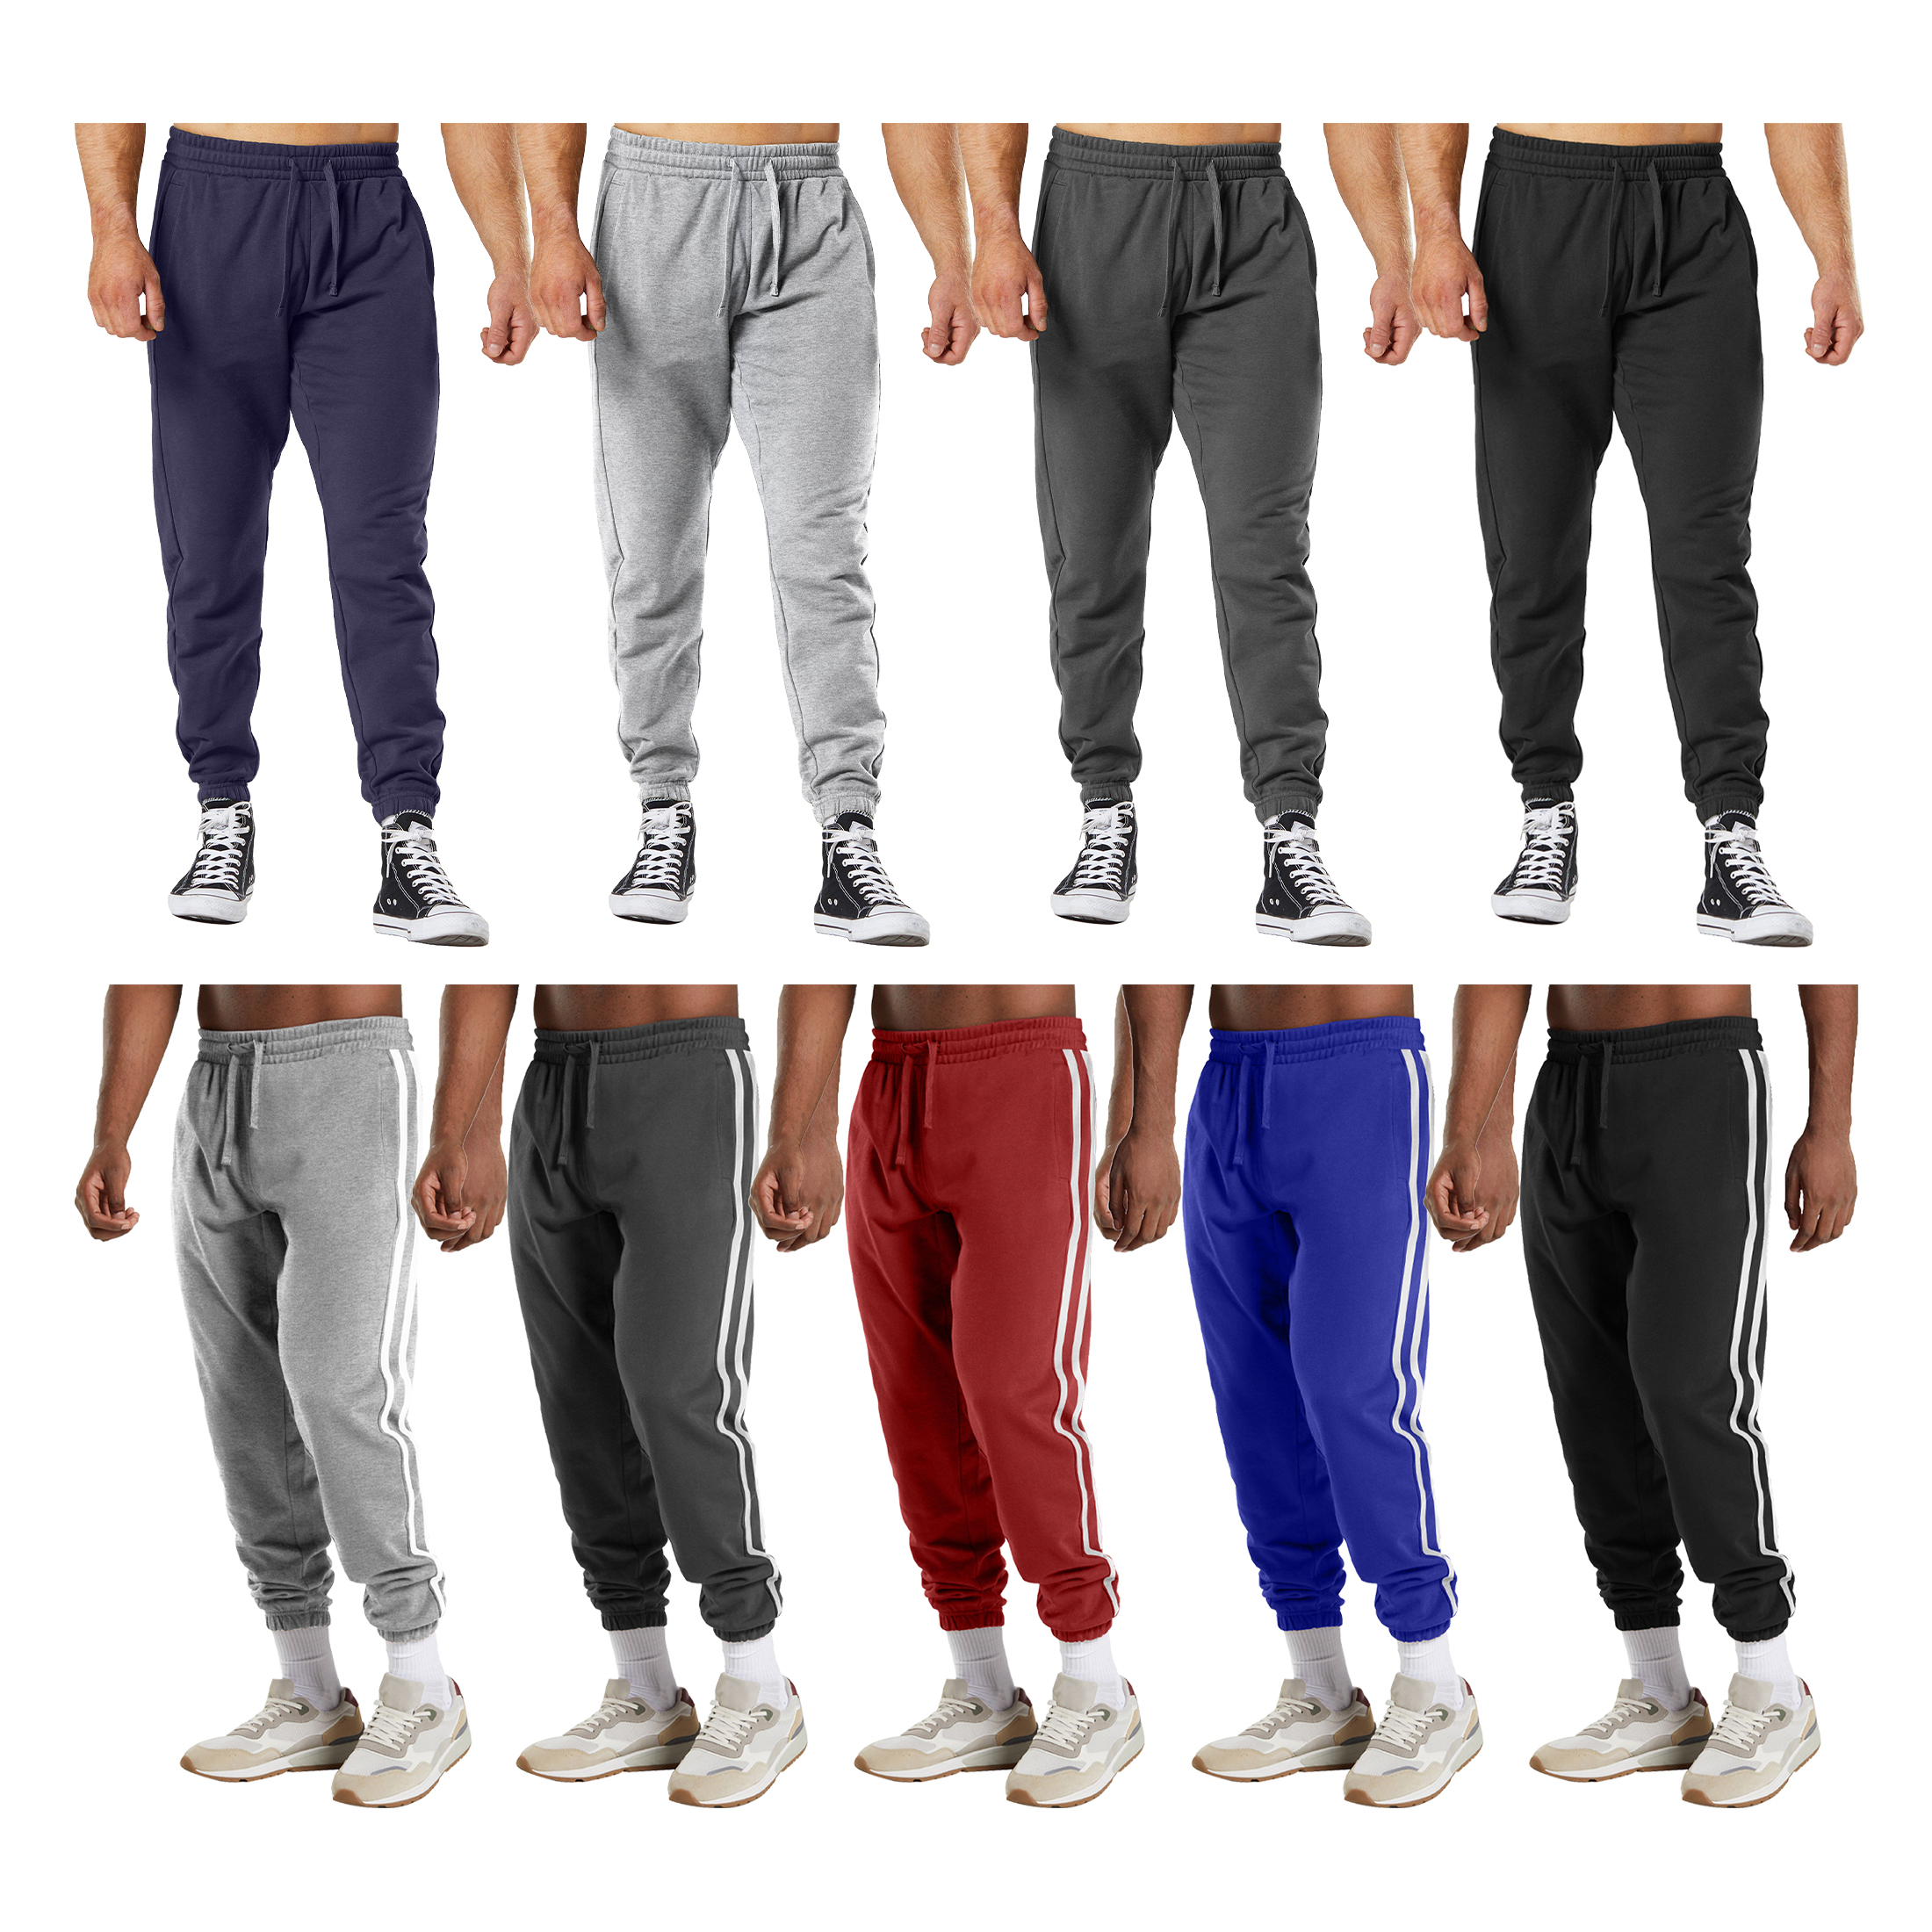 3-Pack: Men's Casual Fleece-Lined Elastic Bottom Sweatpants Jogger Pants With Pockets - Solid & Stripes, Medium